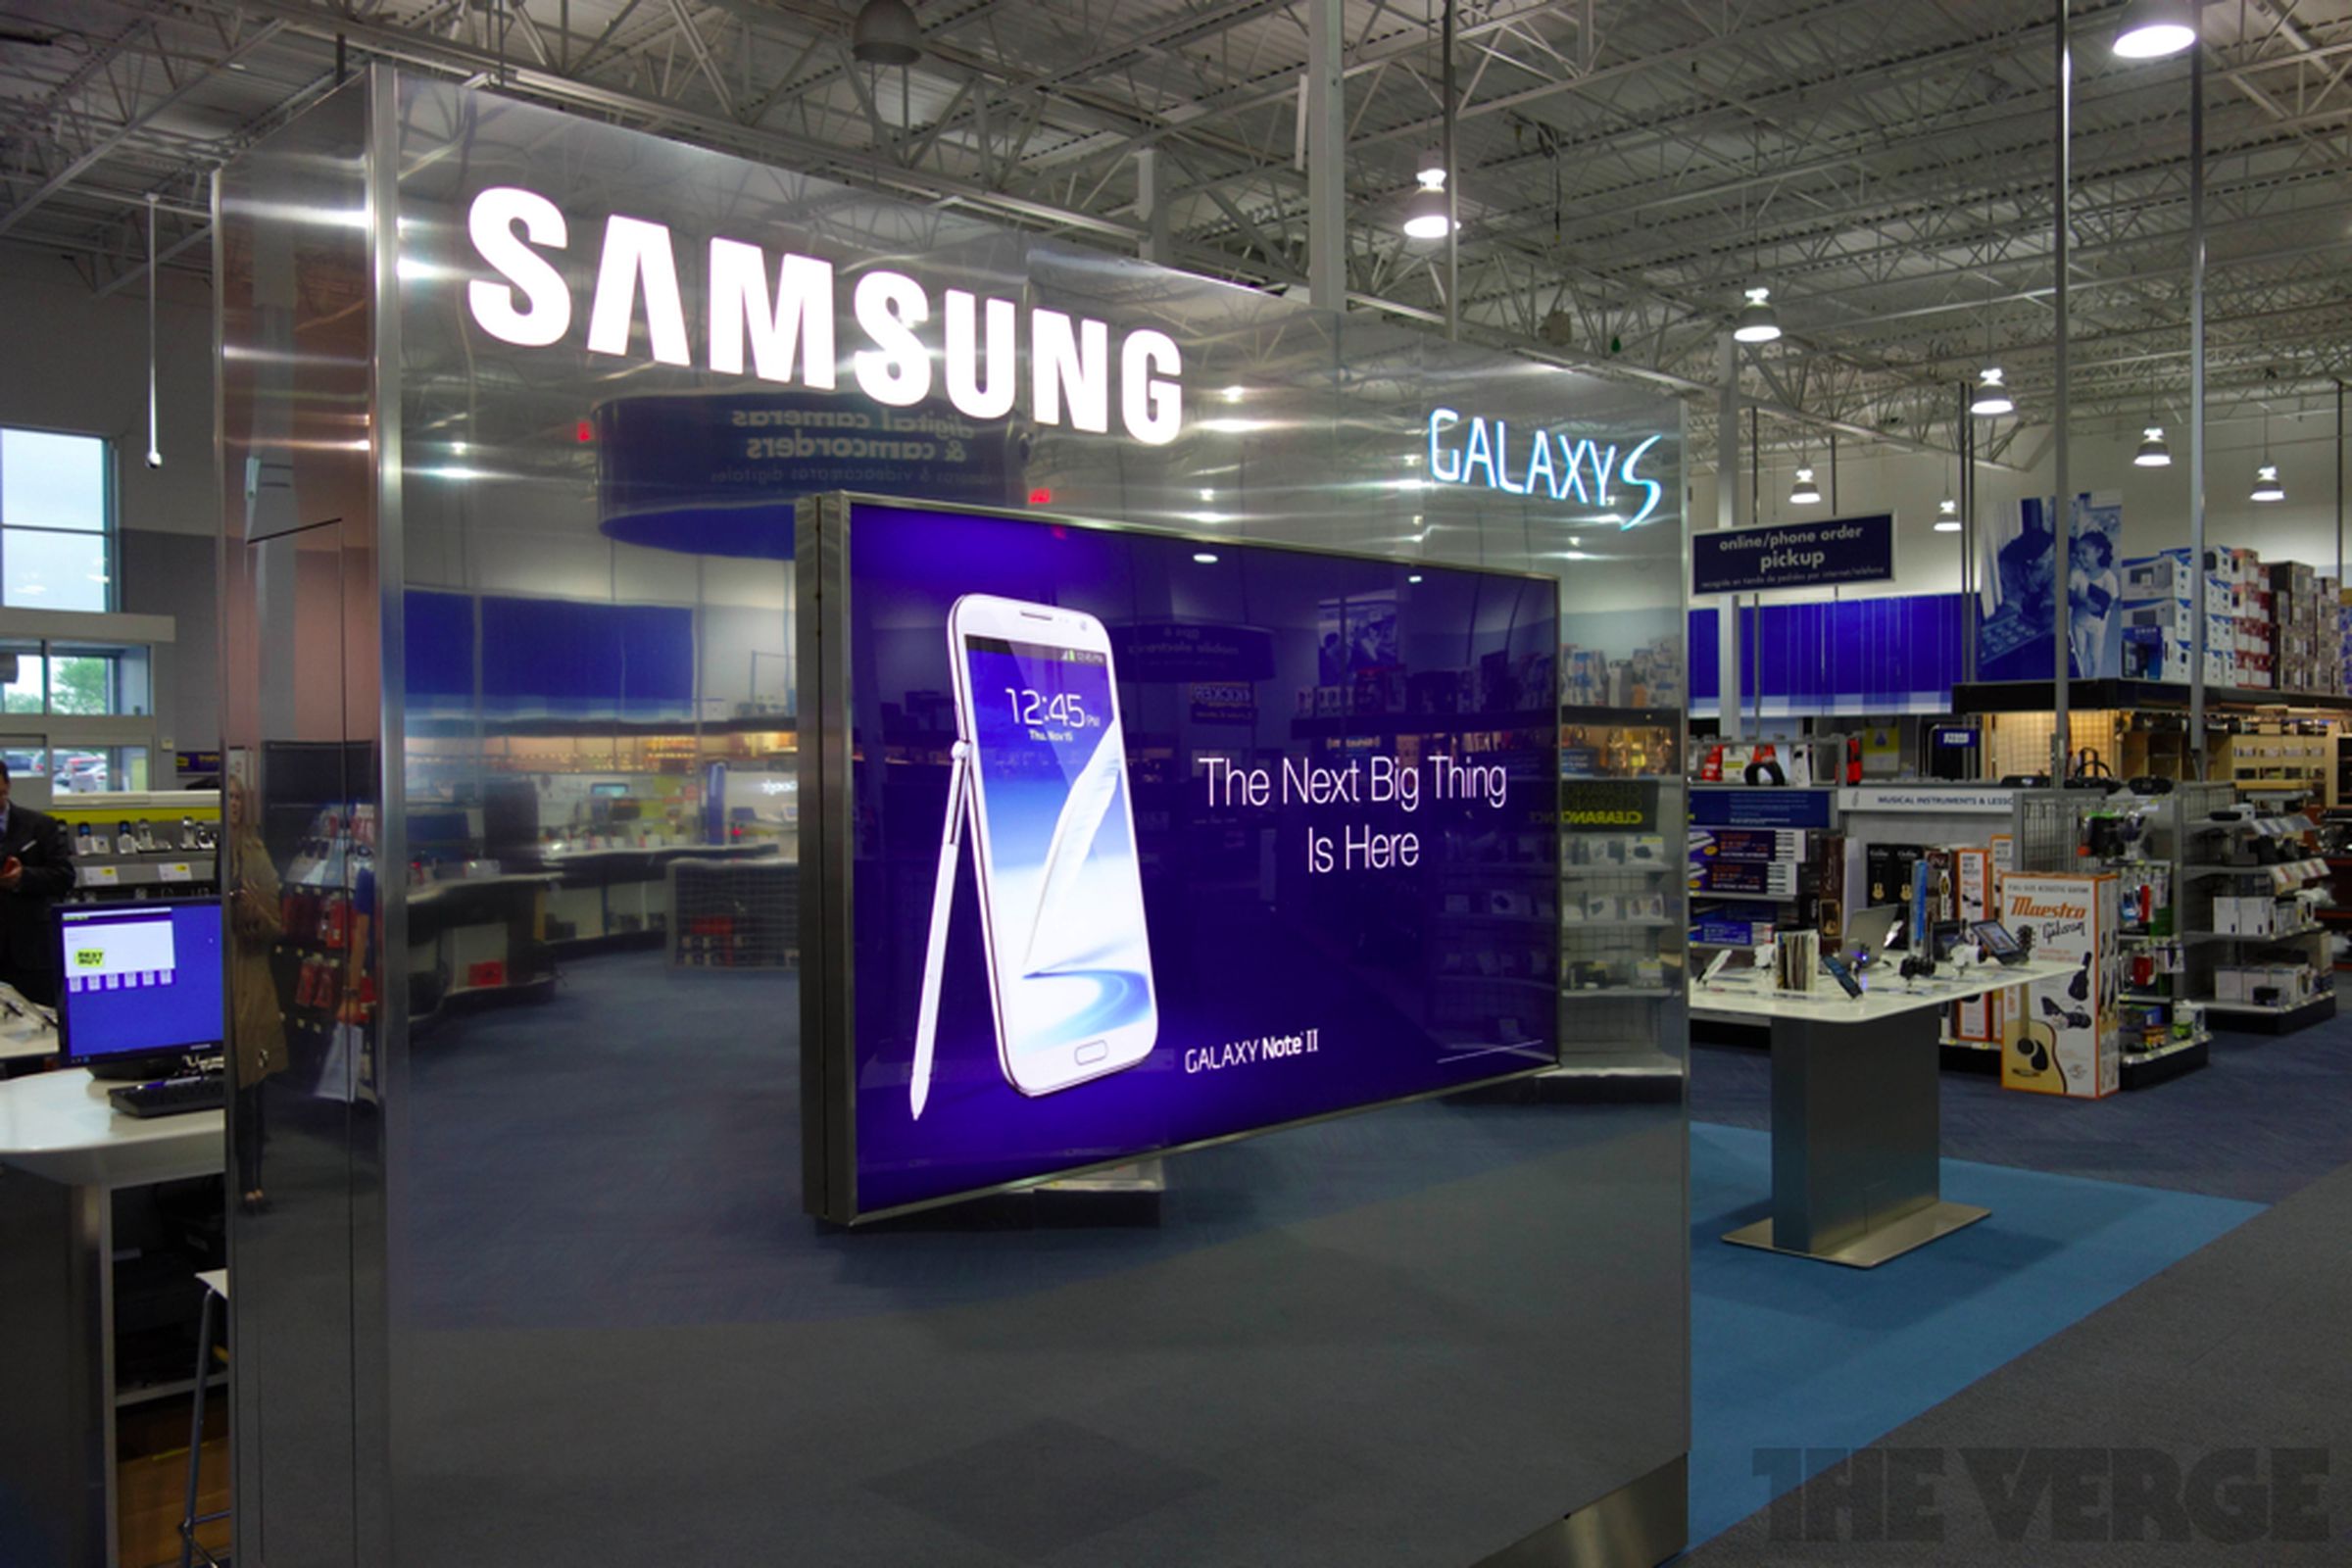 Samsung Experience Shop